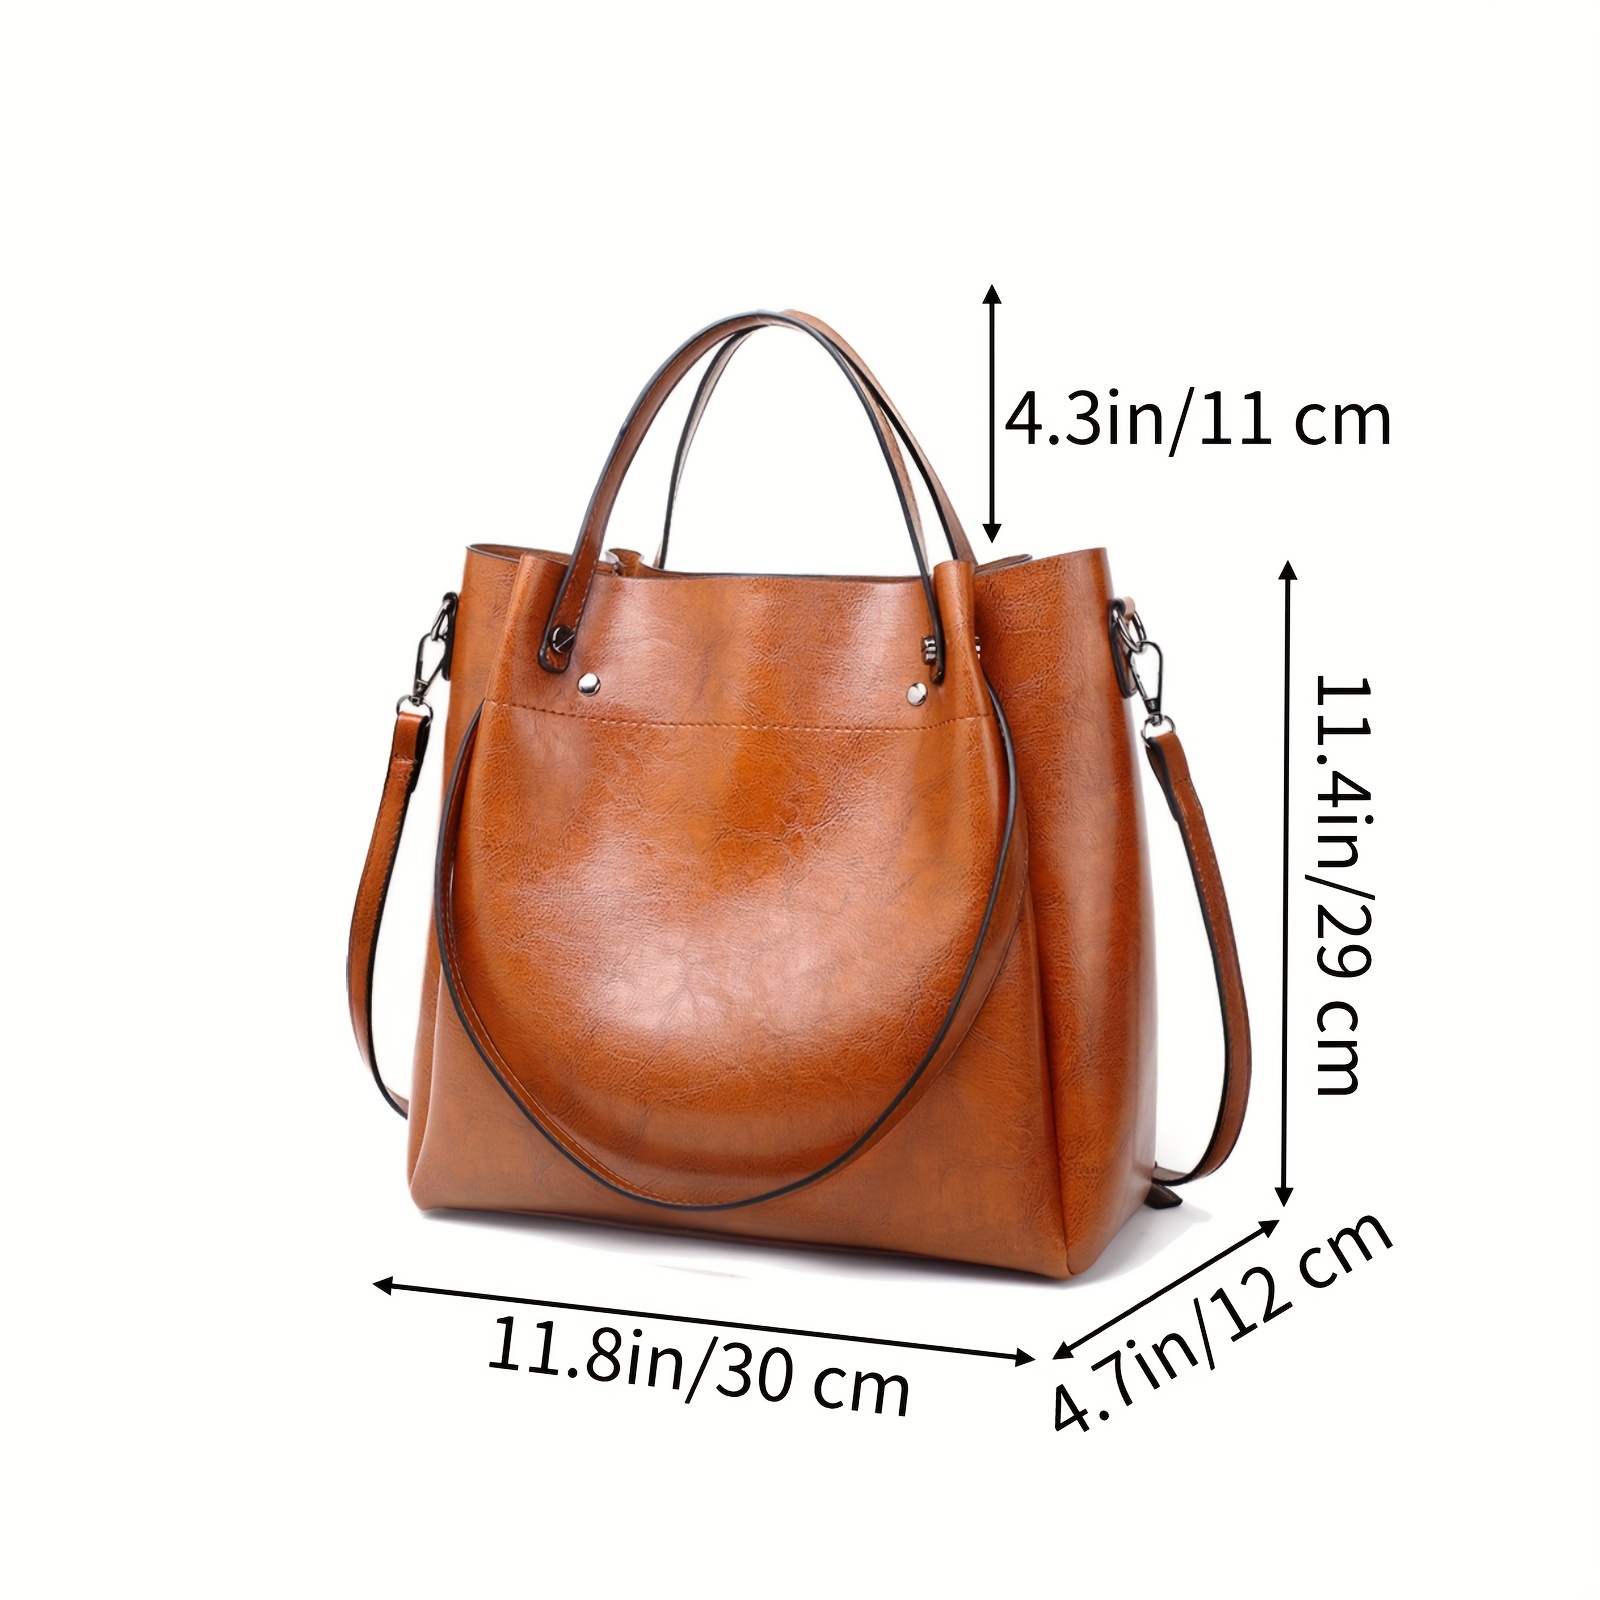 Soft Leather Handbags for Women Shoulder Tote Bag Ladies Large